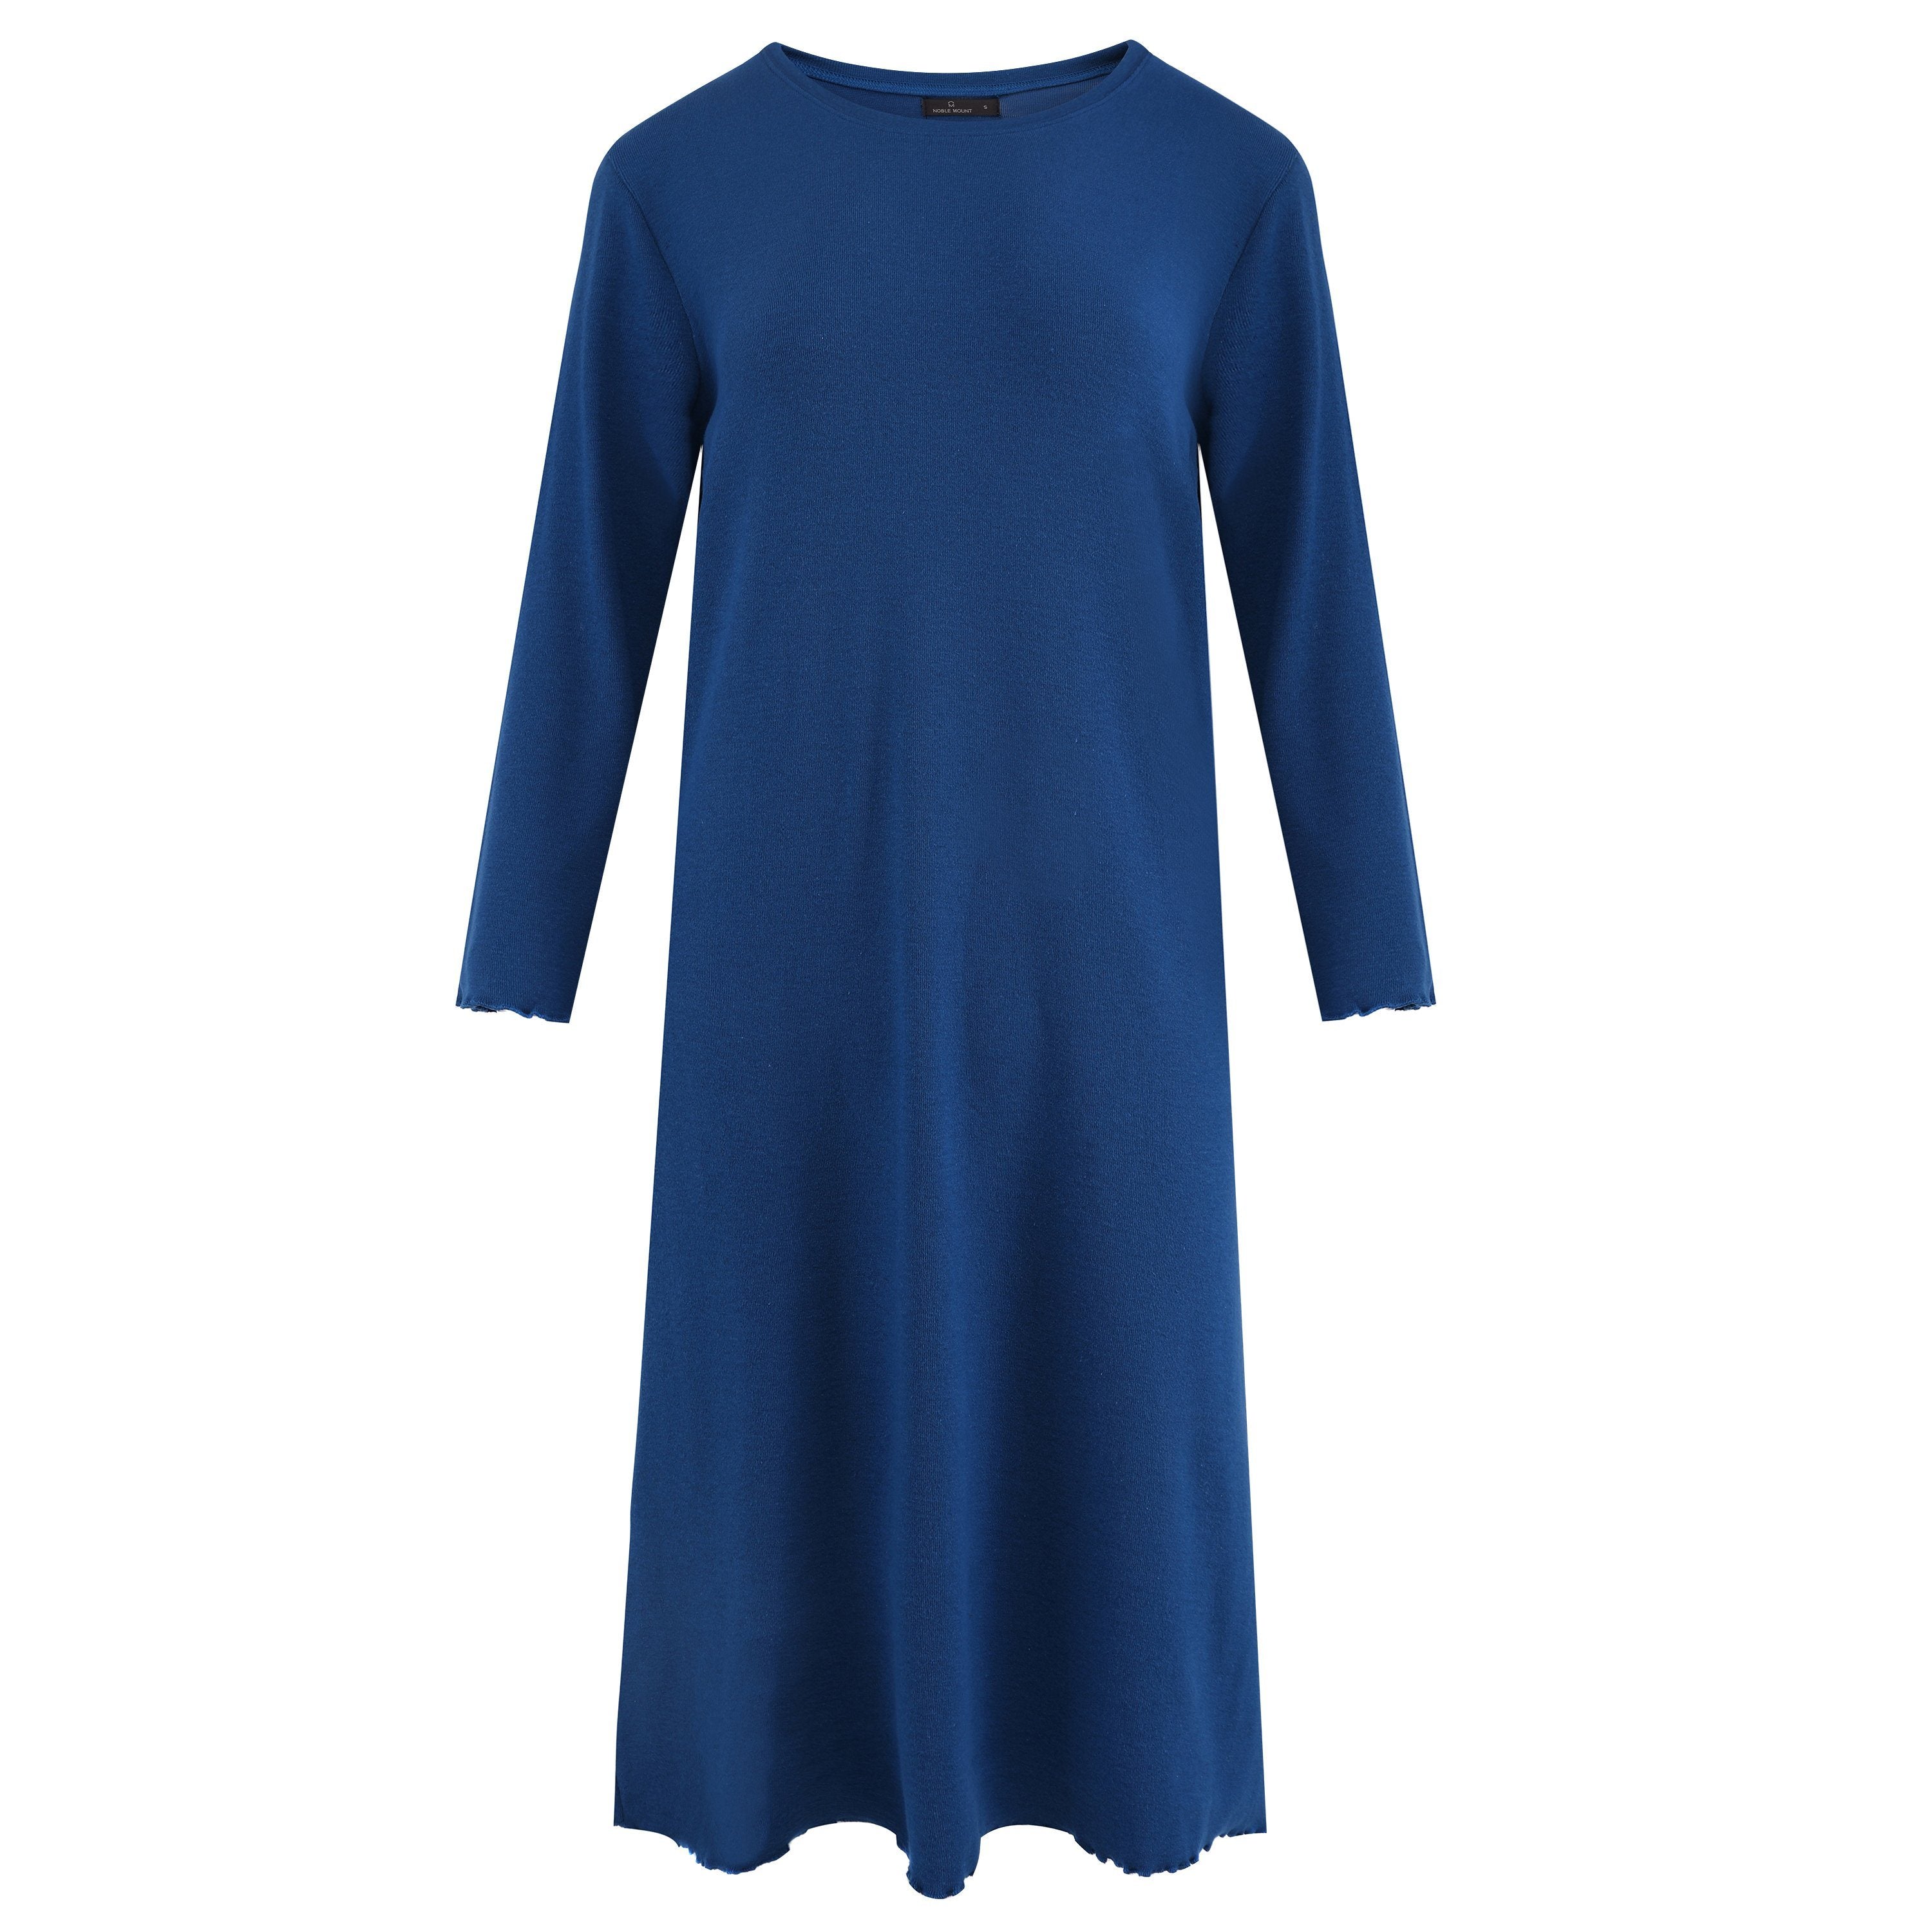 Women's Cozy Rib Sleep Dress (3/4 Sleeve)